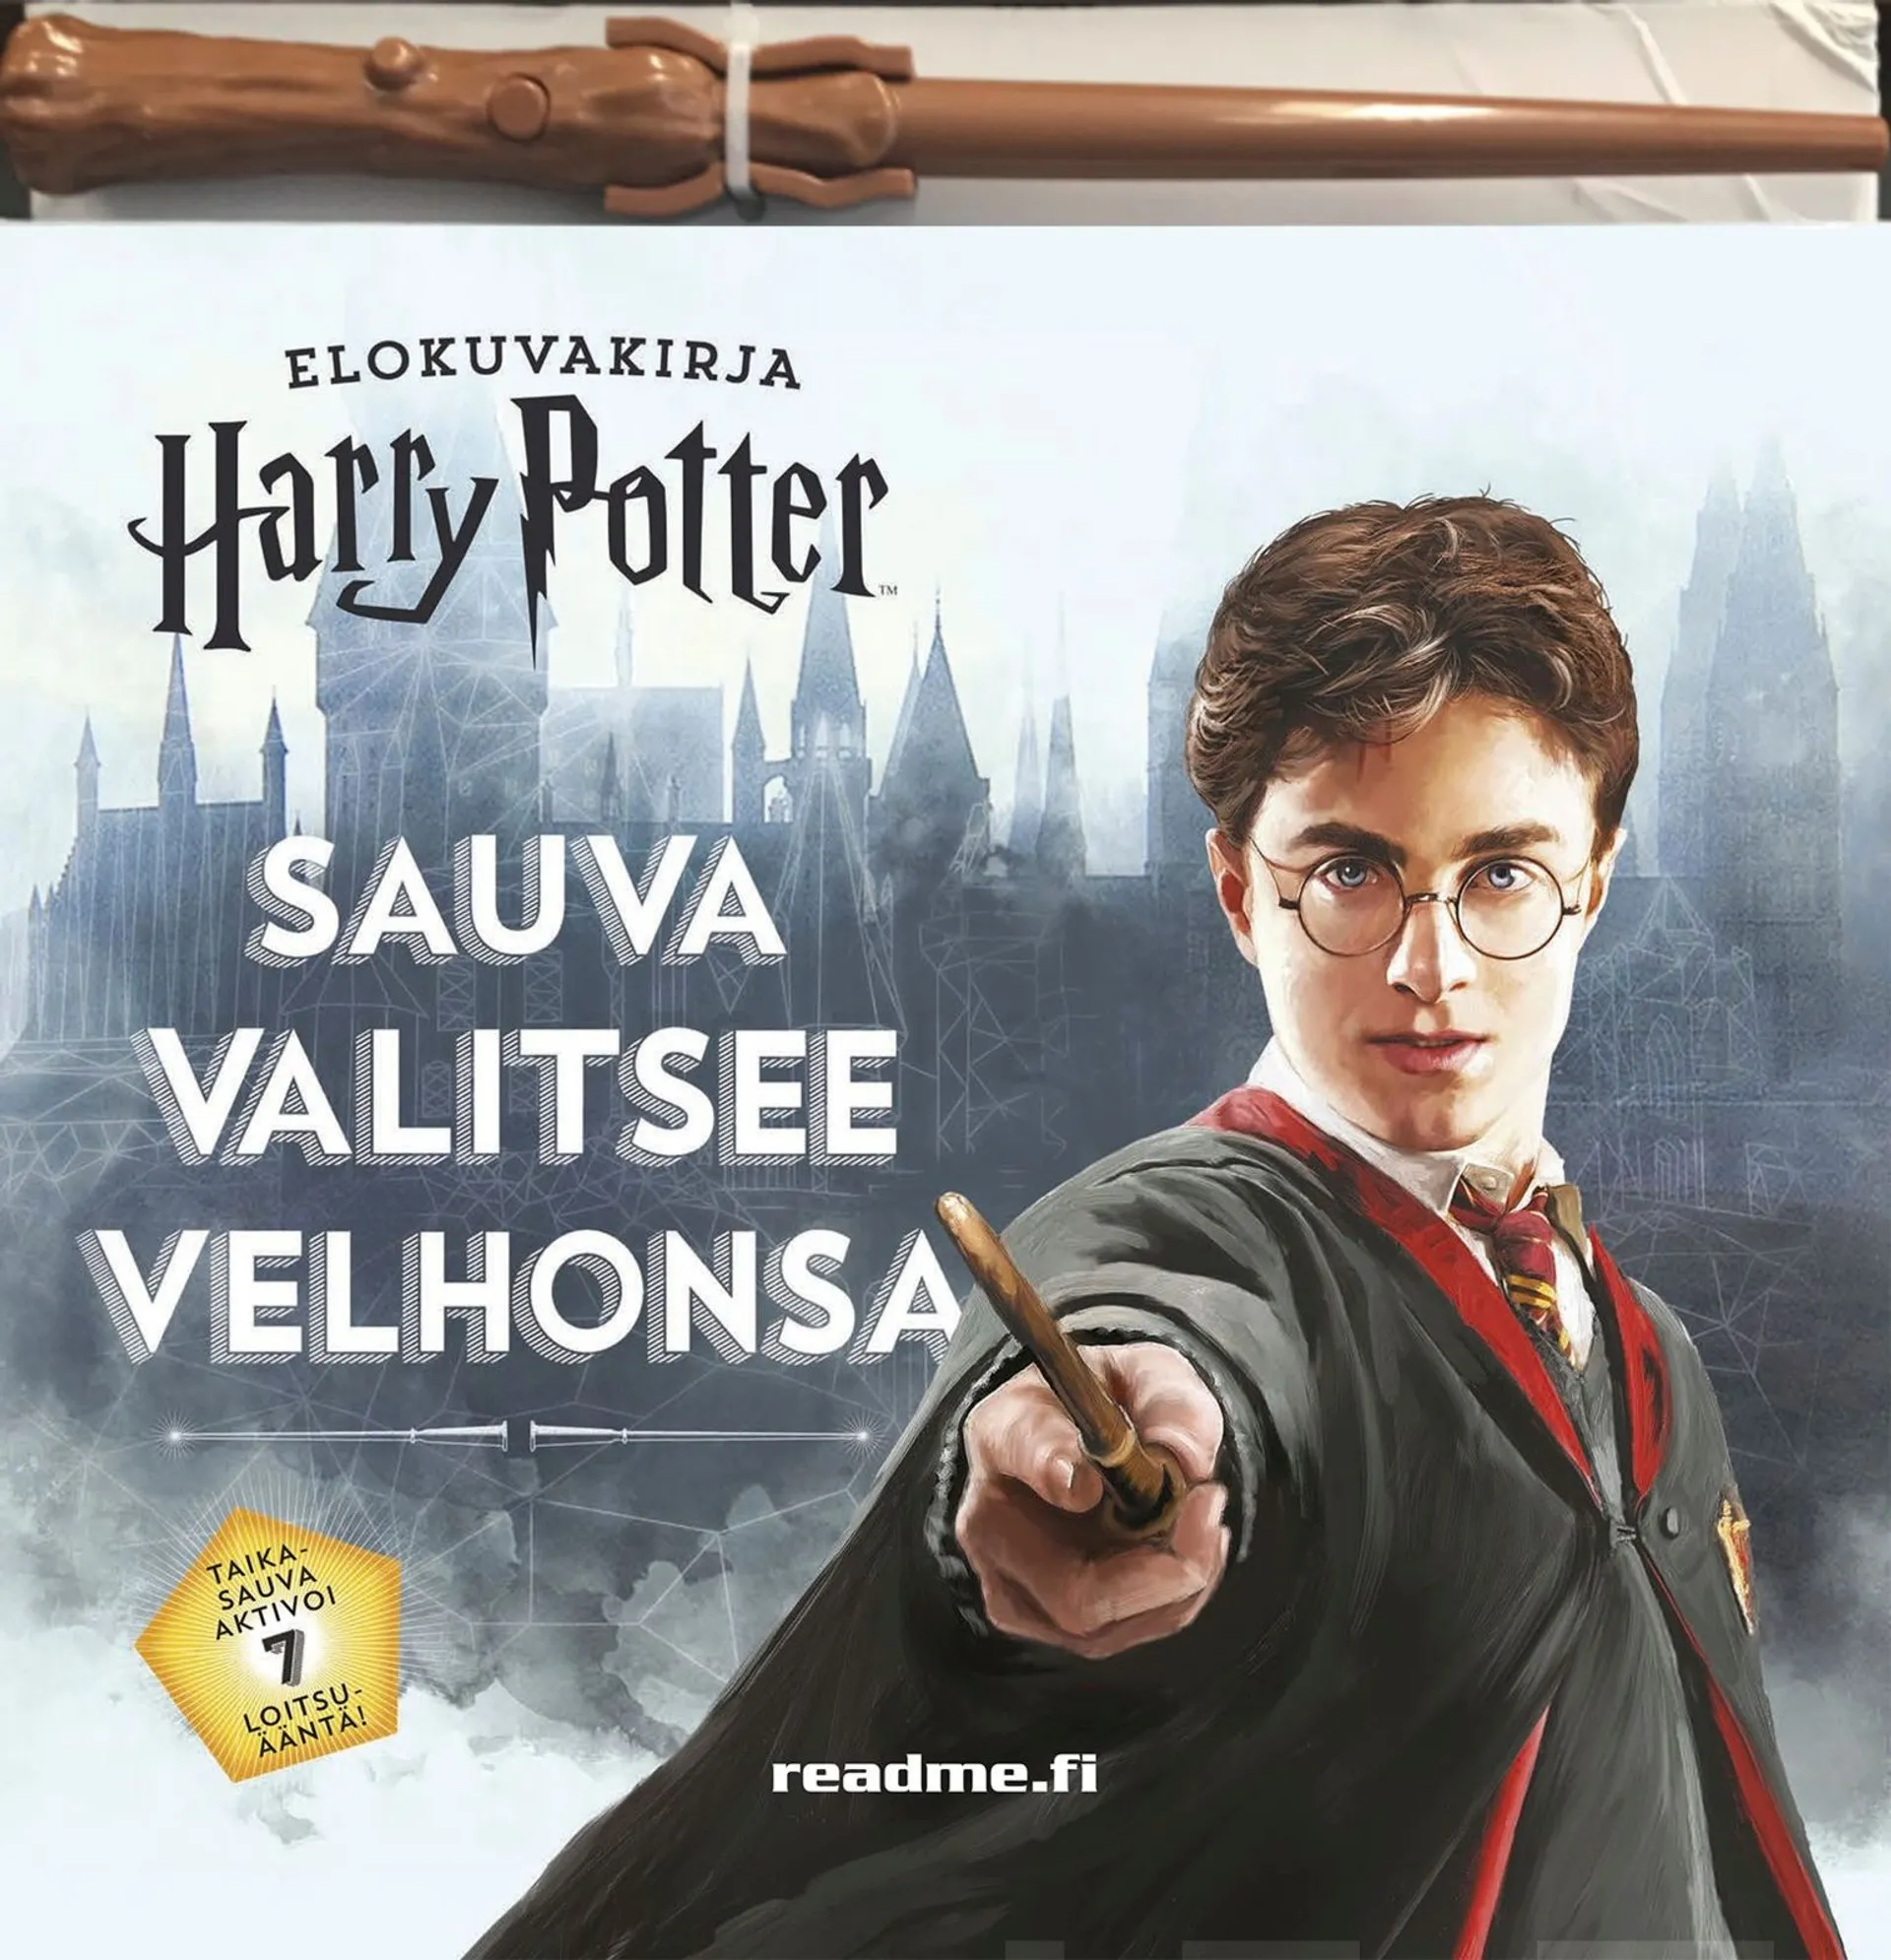 Harry Potter - Sauva valitsee velhonsa